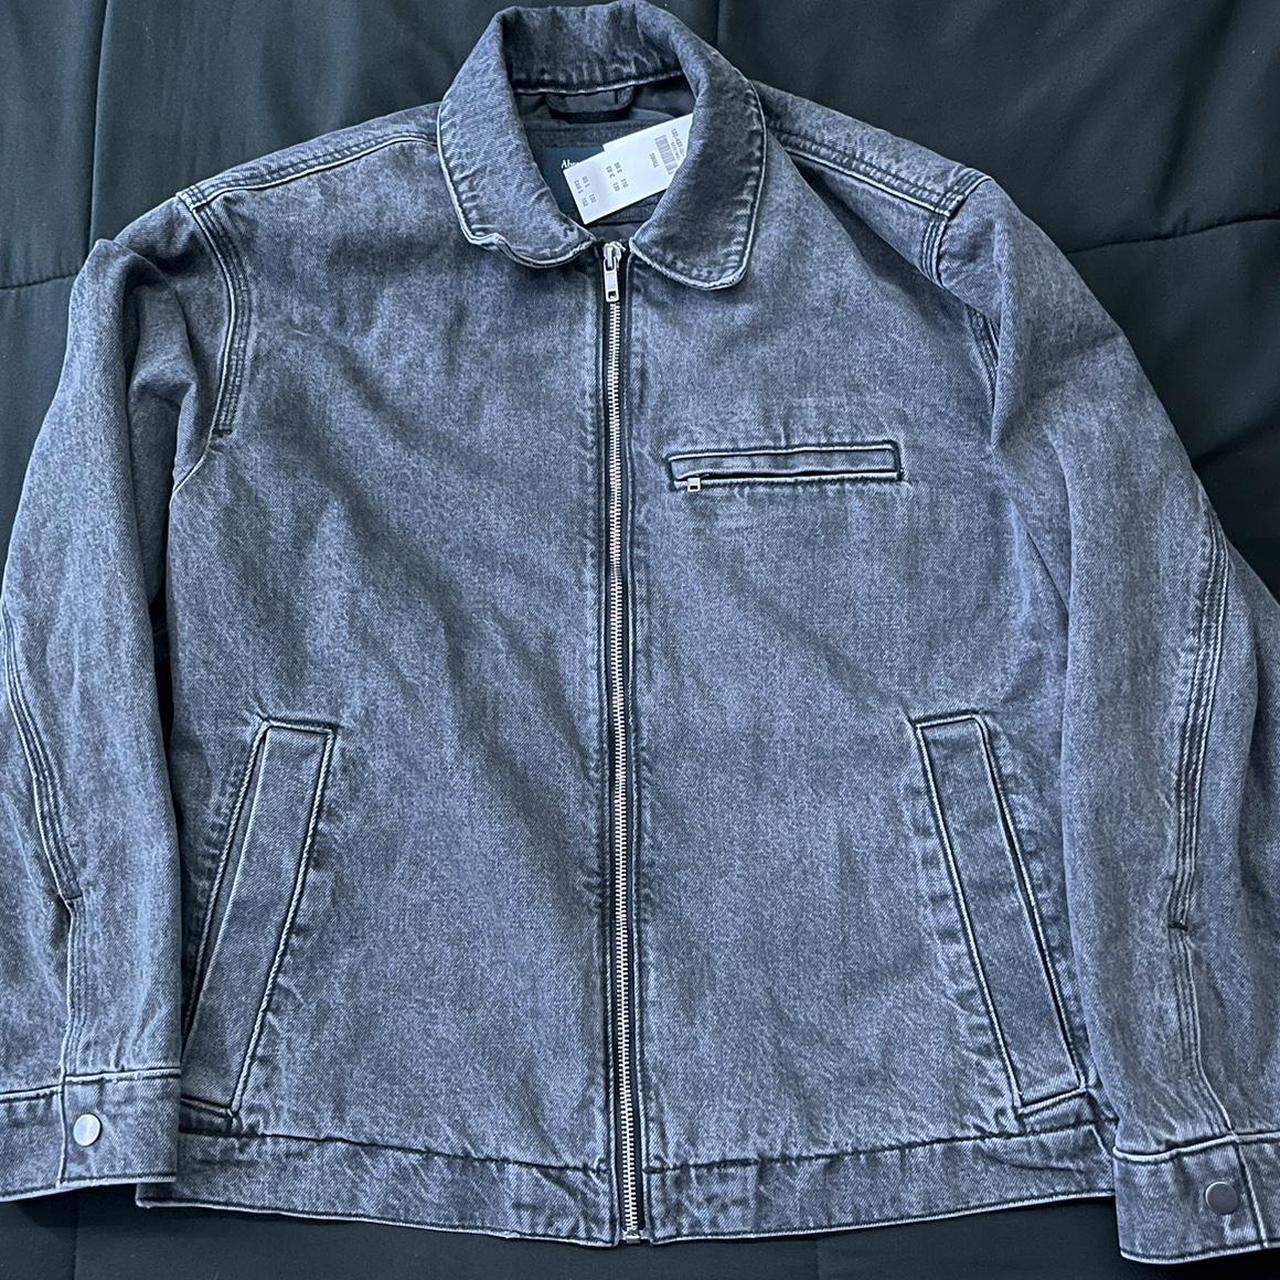 Brand New Abercrombie & Fitch Workwear Jacket with... - Depop